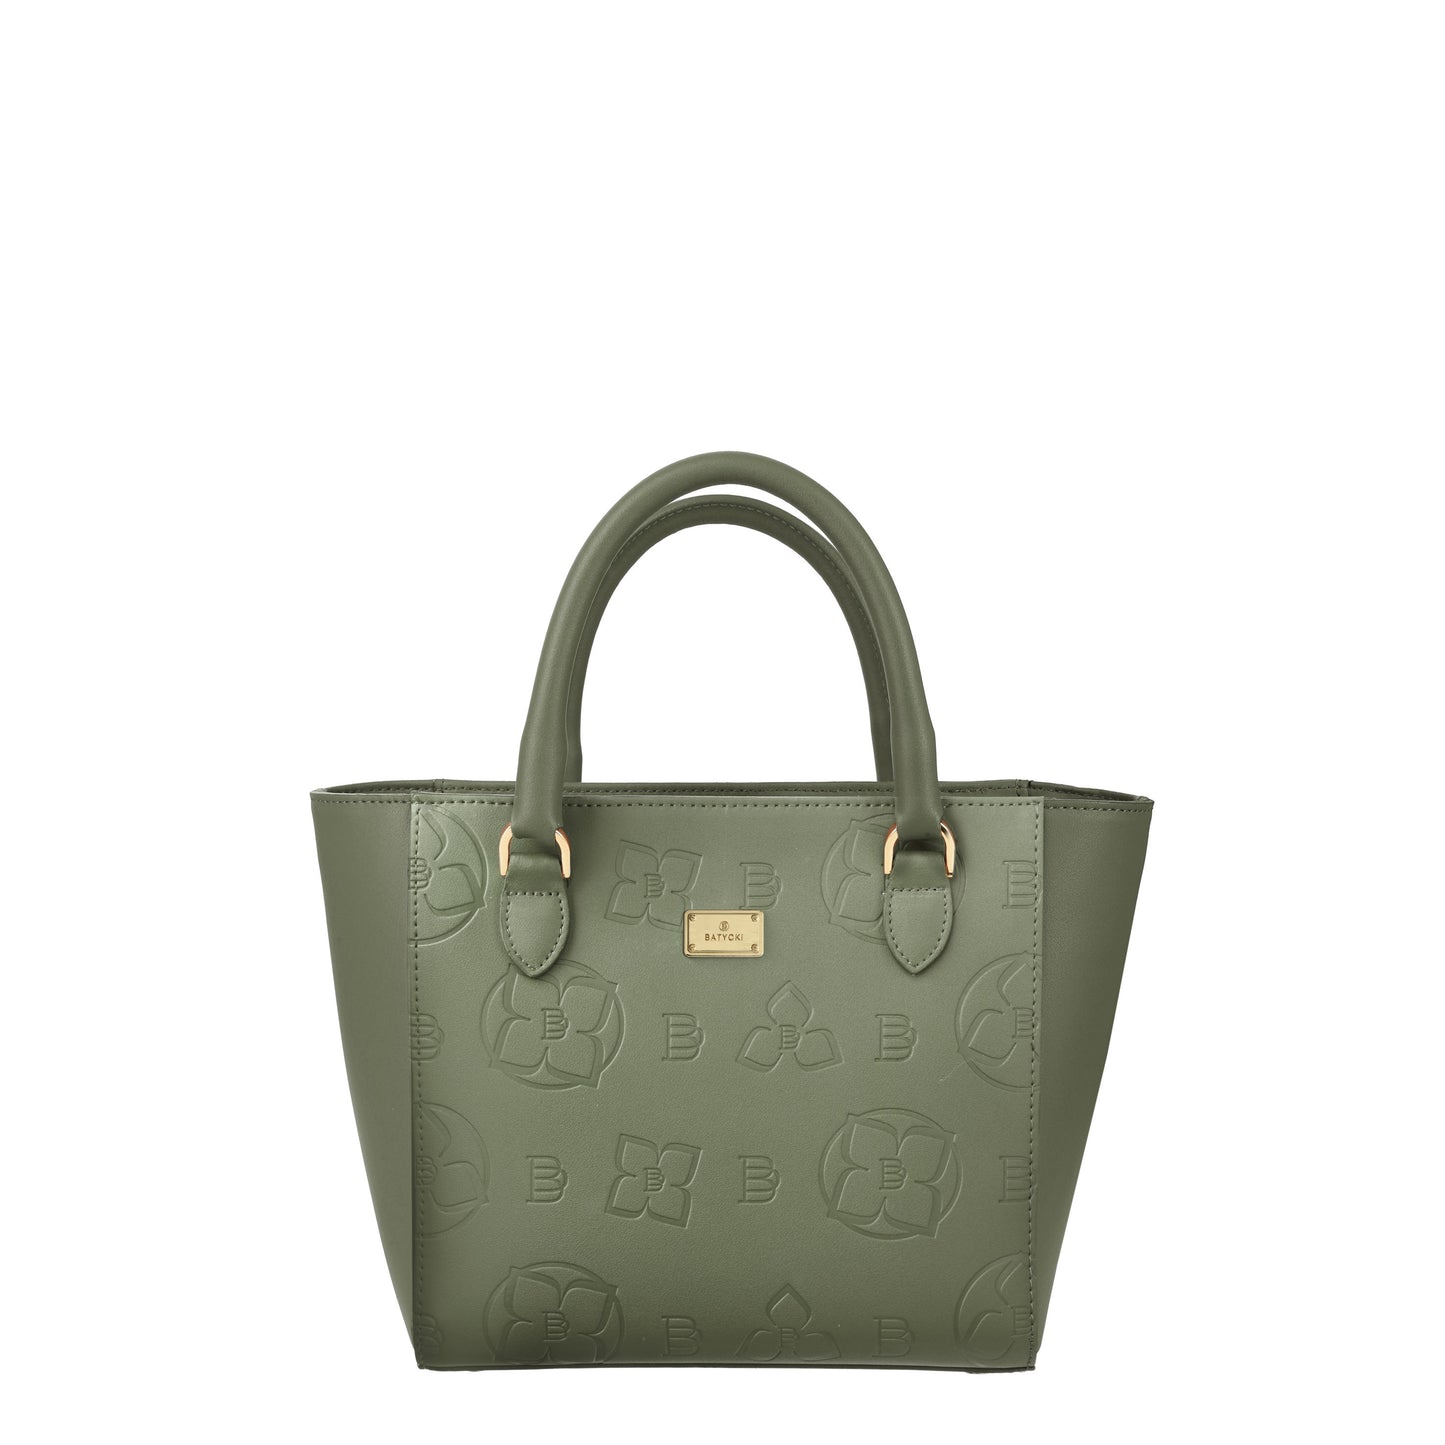 STAMPIA S NAPA OLIVE women's leather handbag